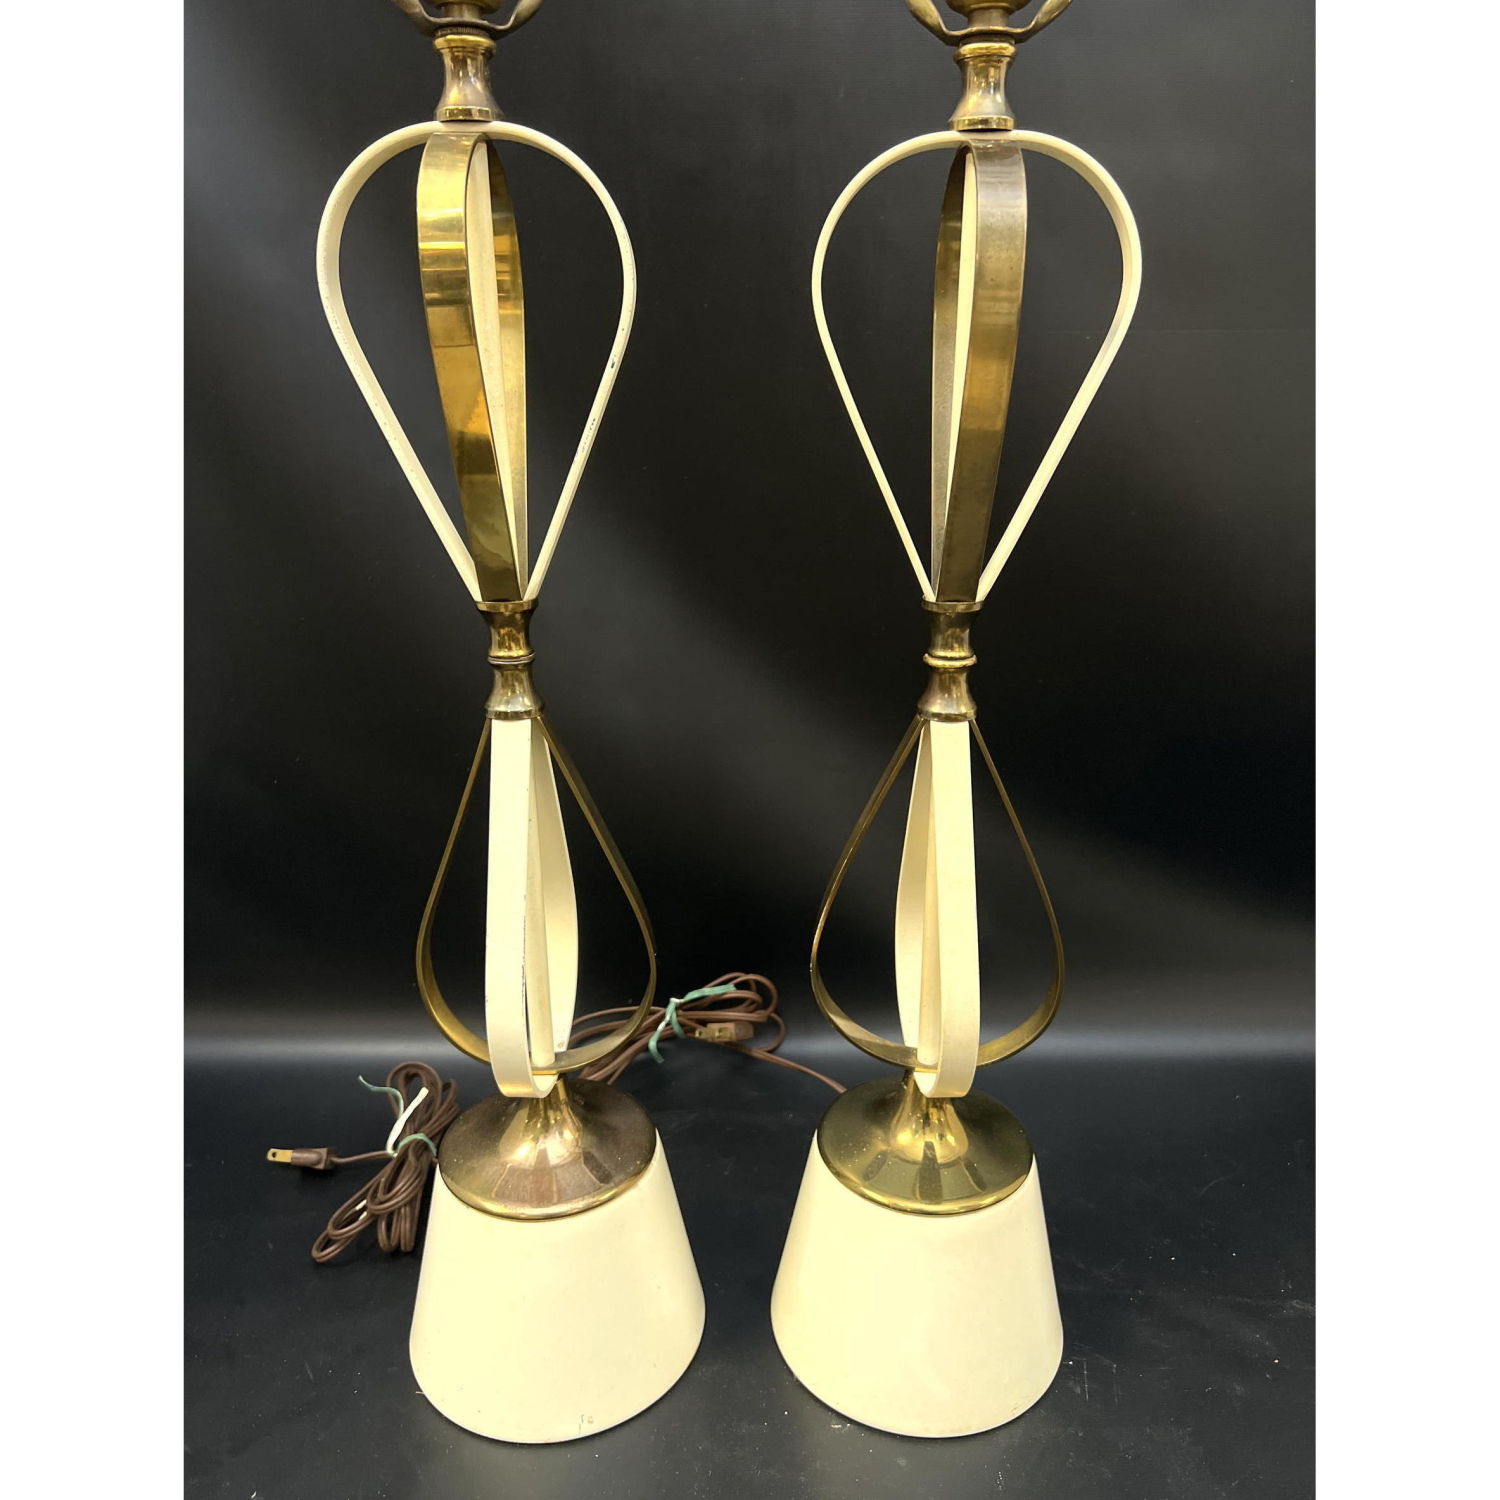 Pr Modernist Table Lamps. Brass